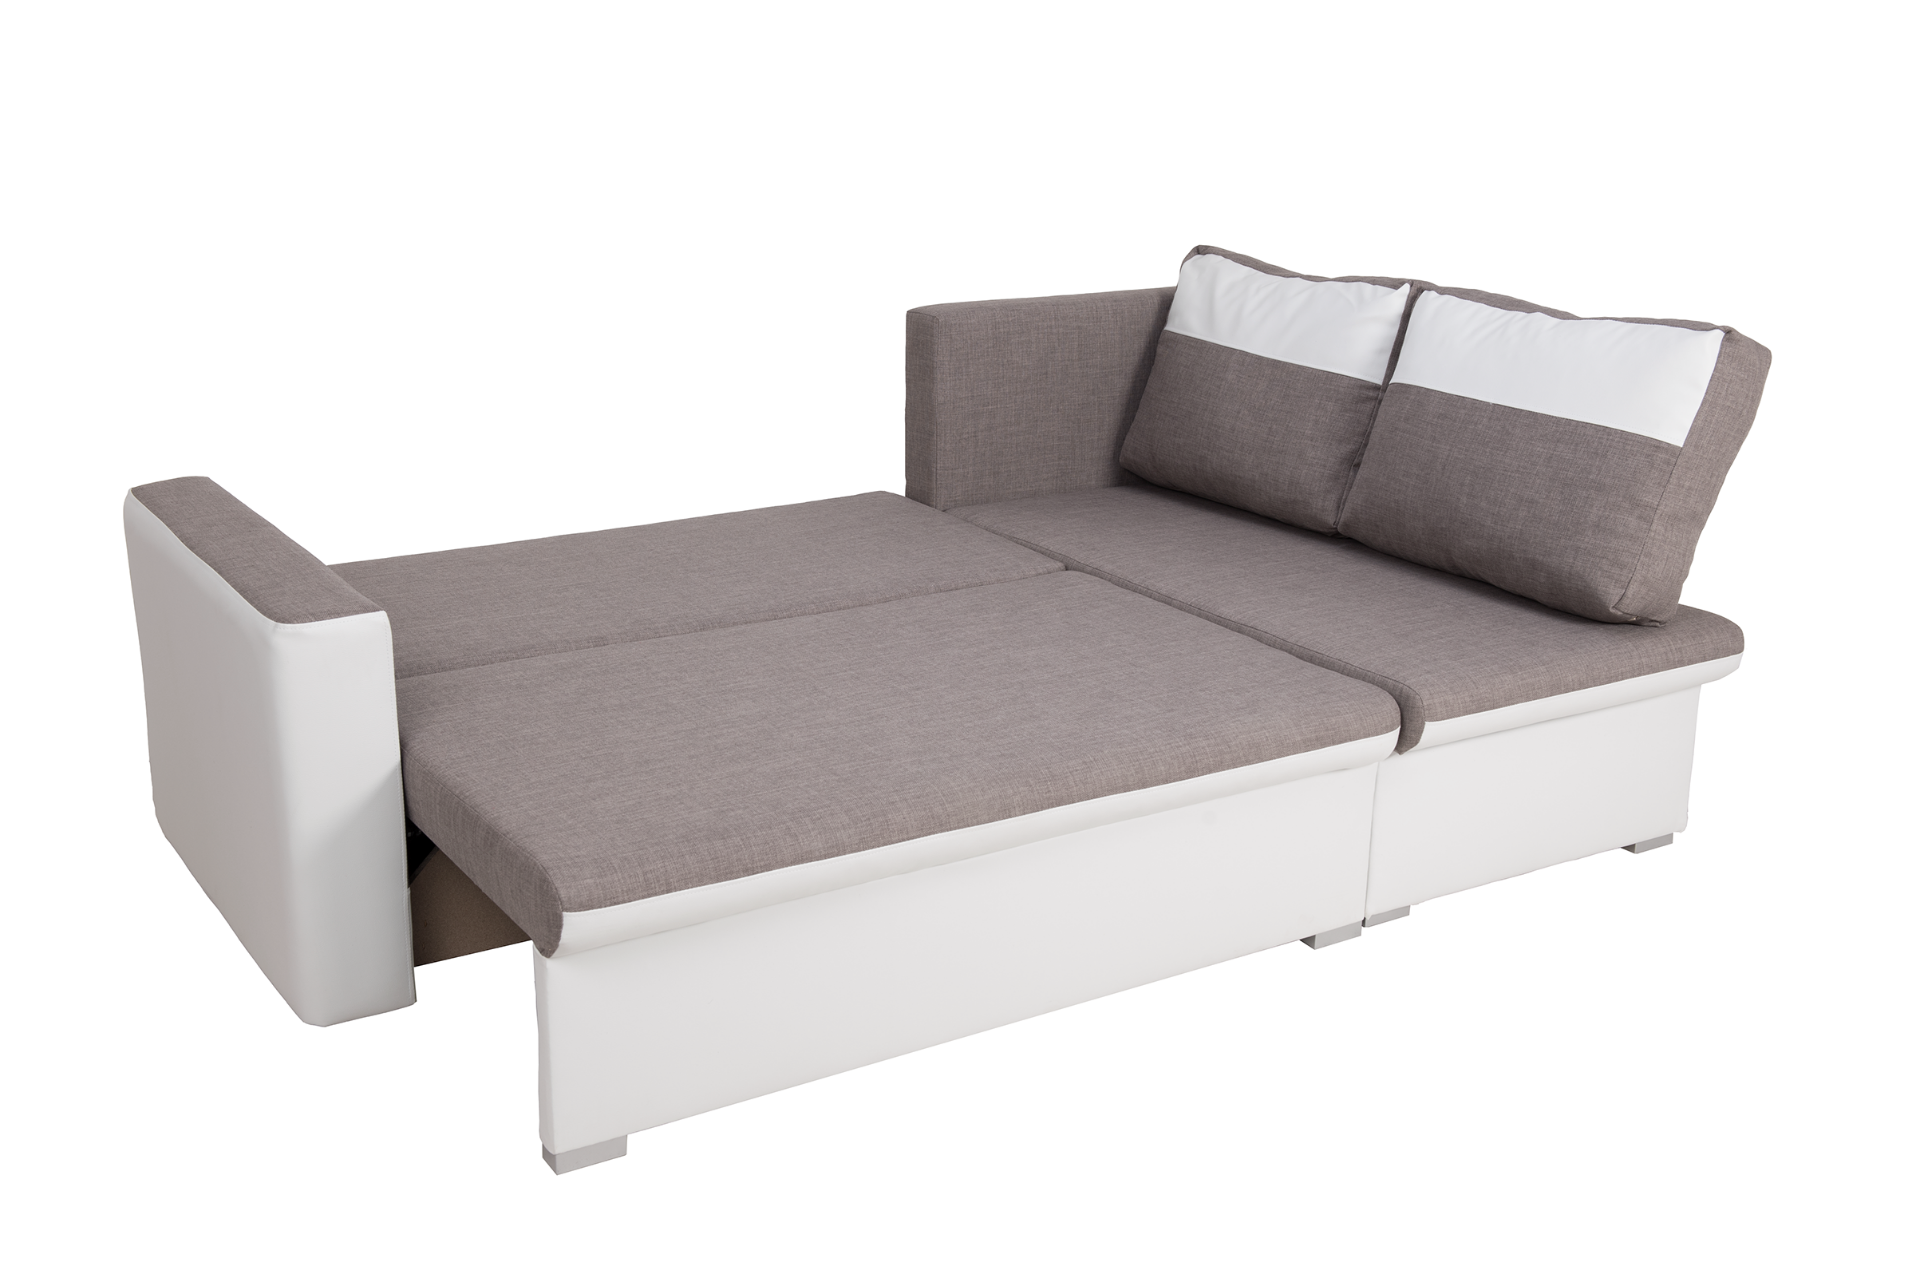 Brand New FlVio Right Hand Facing White/Grey Corner Fold Out Sofa Bed With Storage - Image 2 of 3